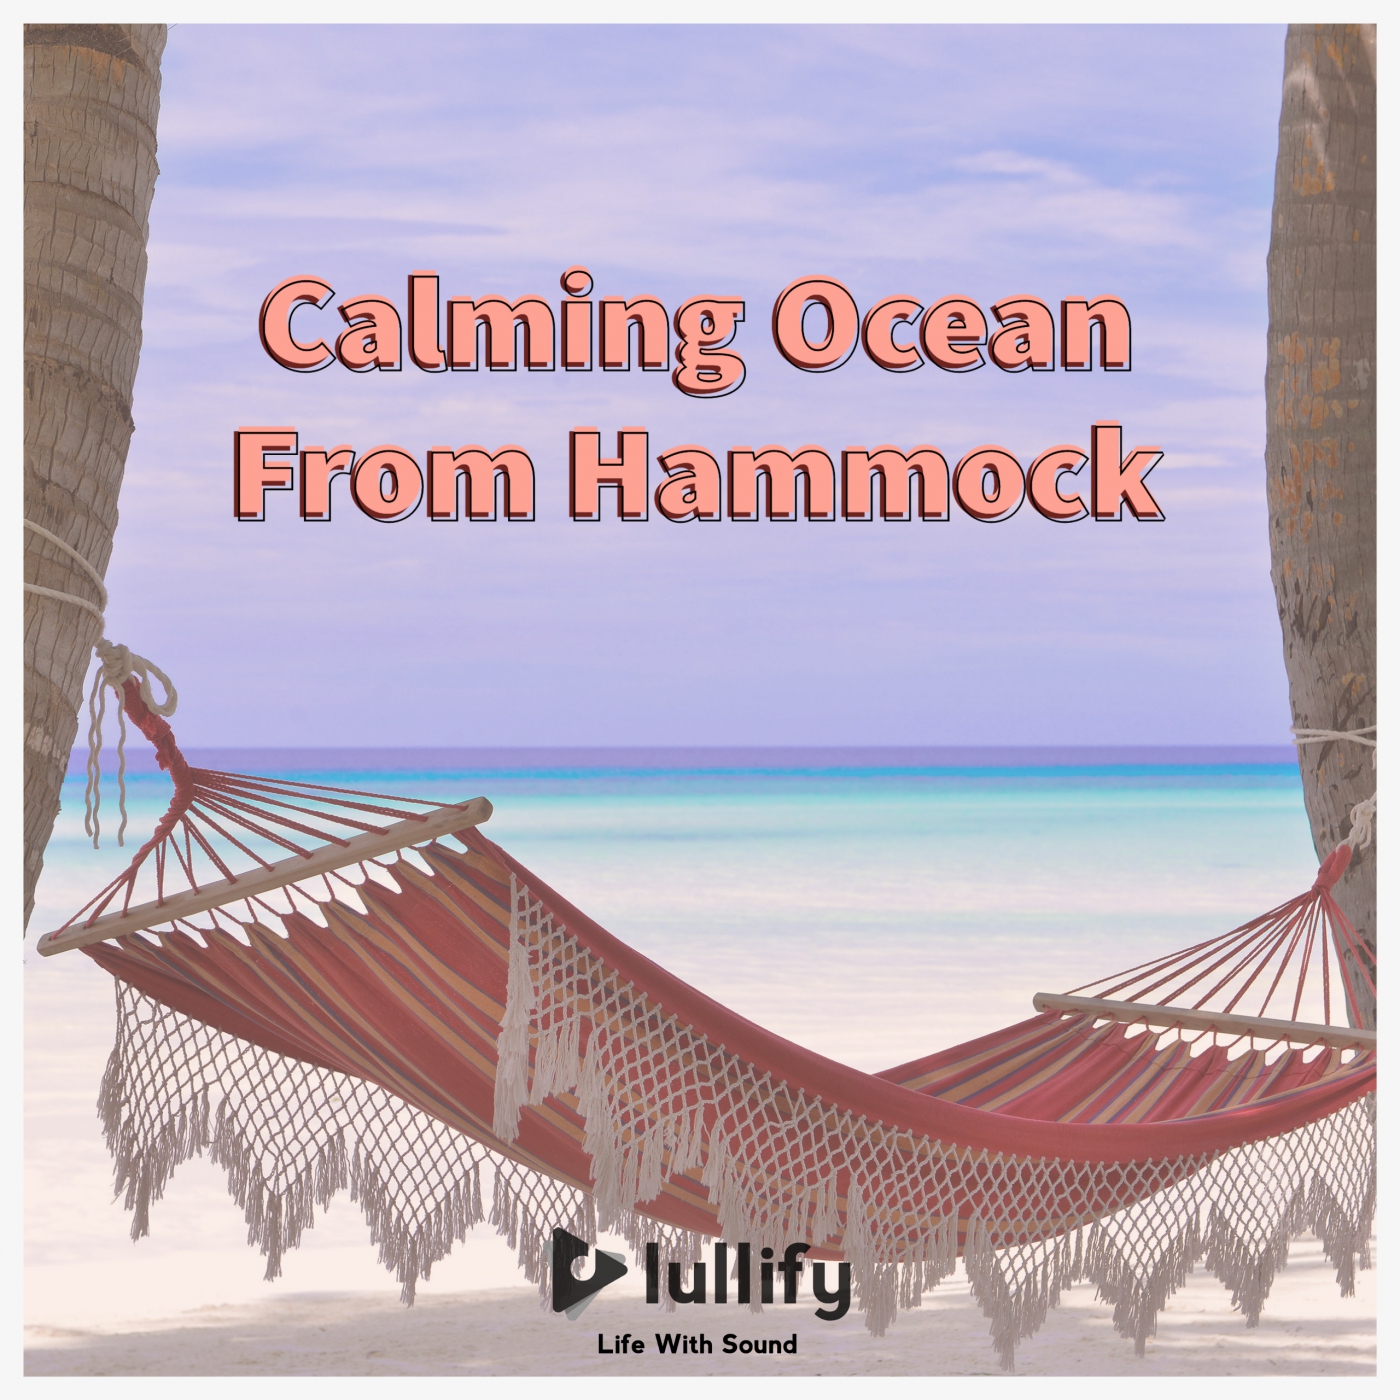 Calming Ocean From Hammock